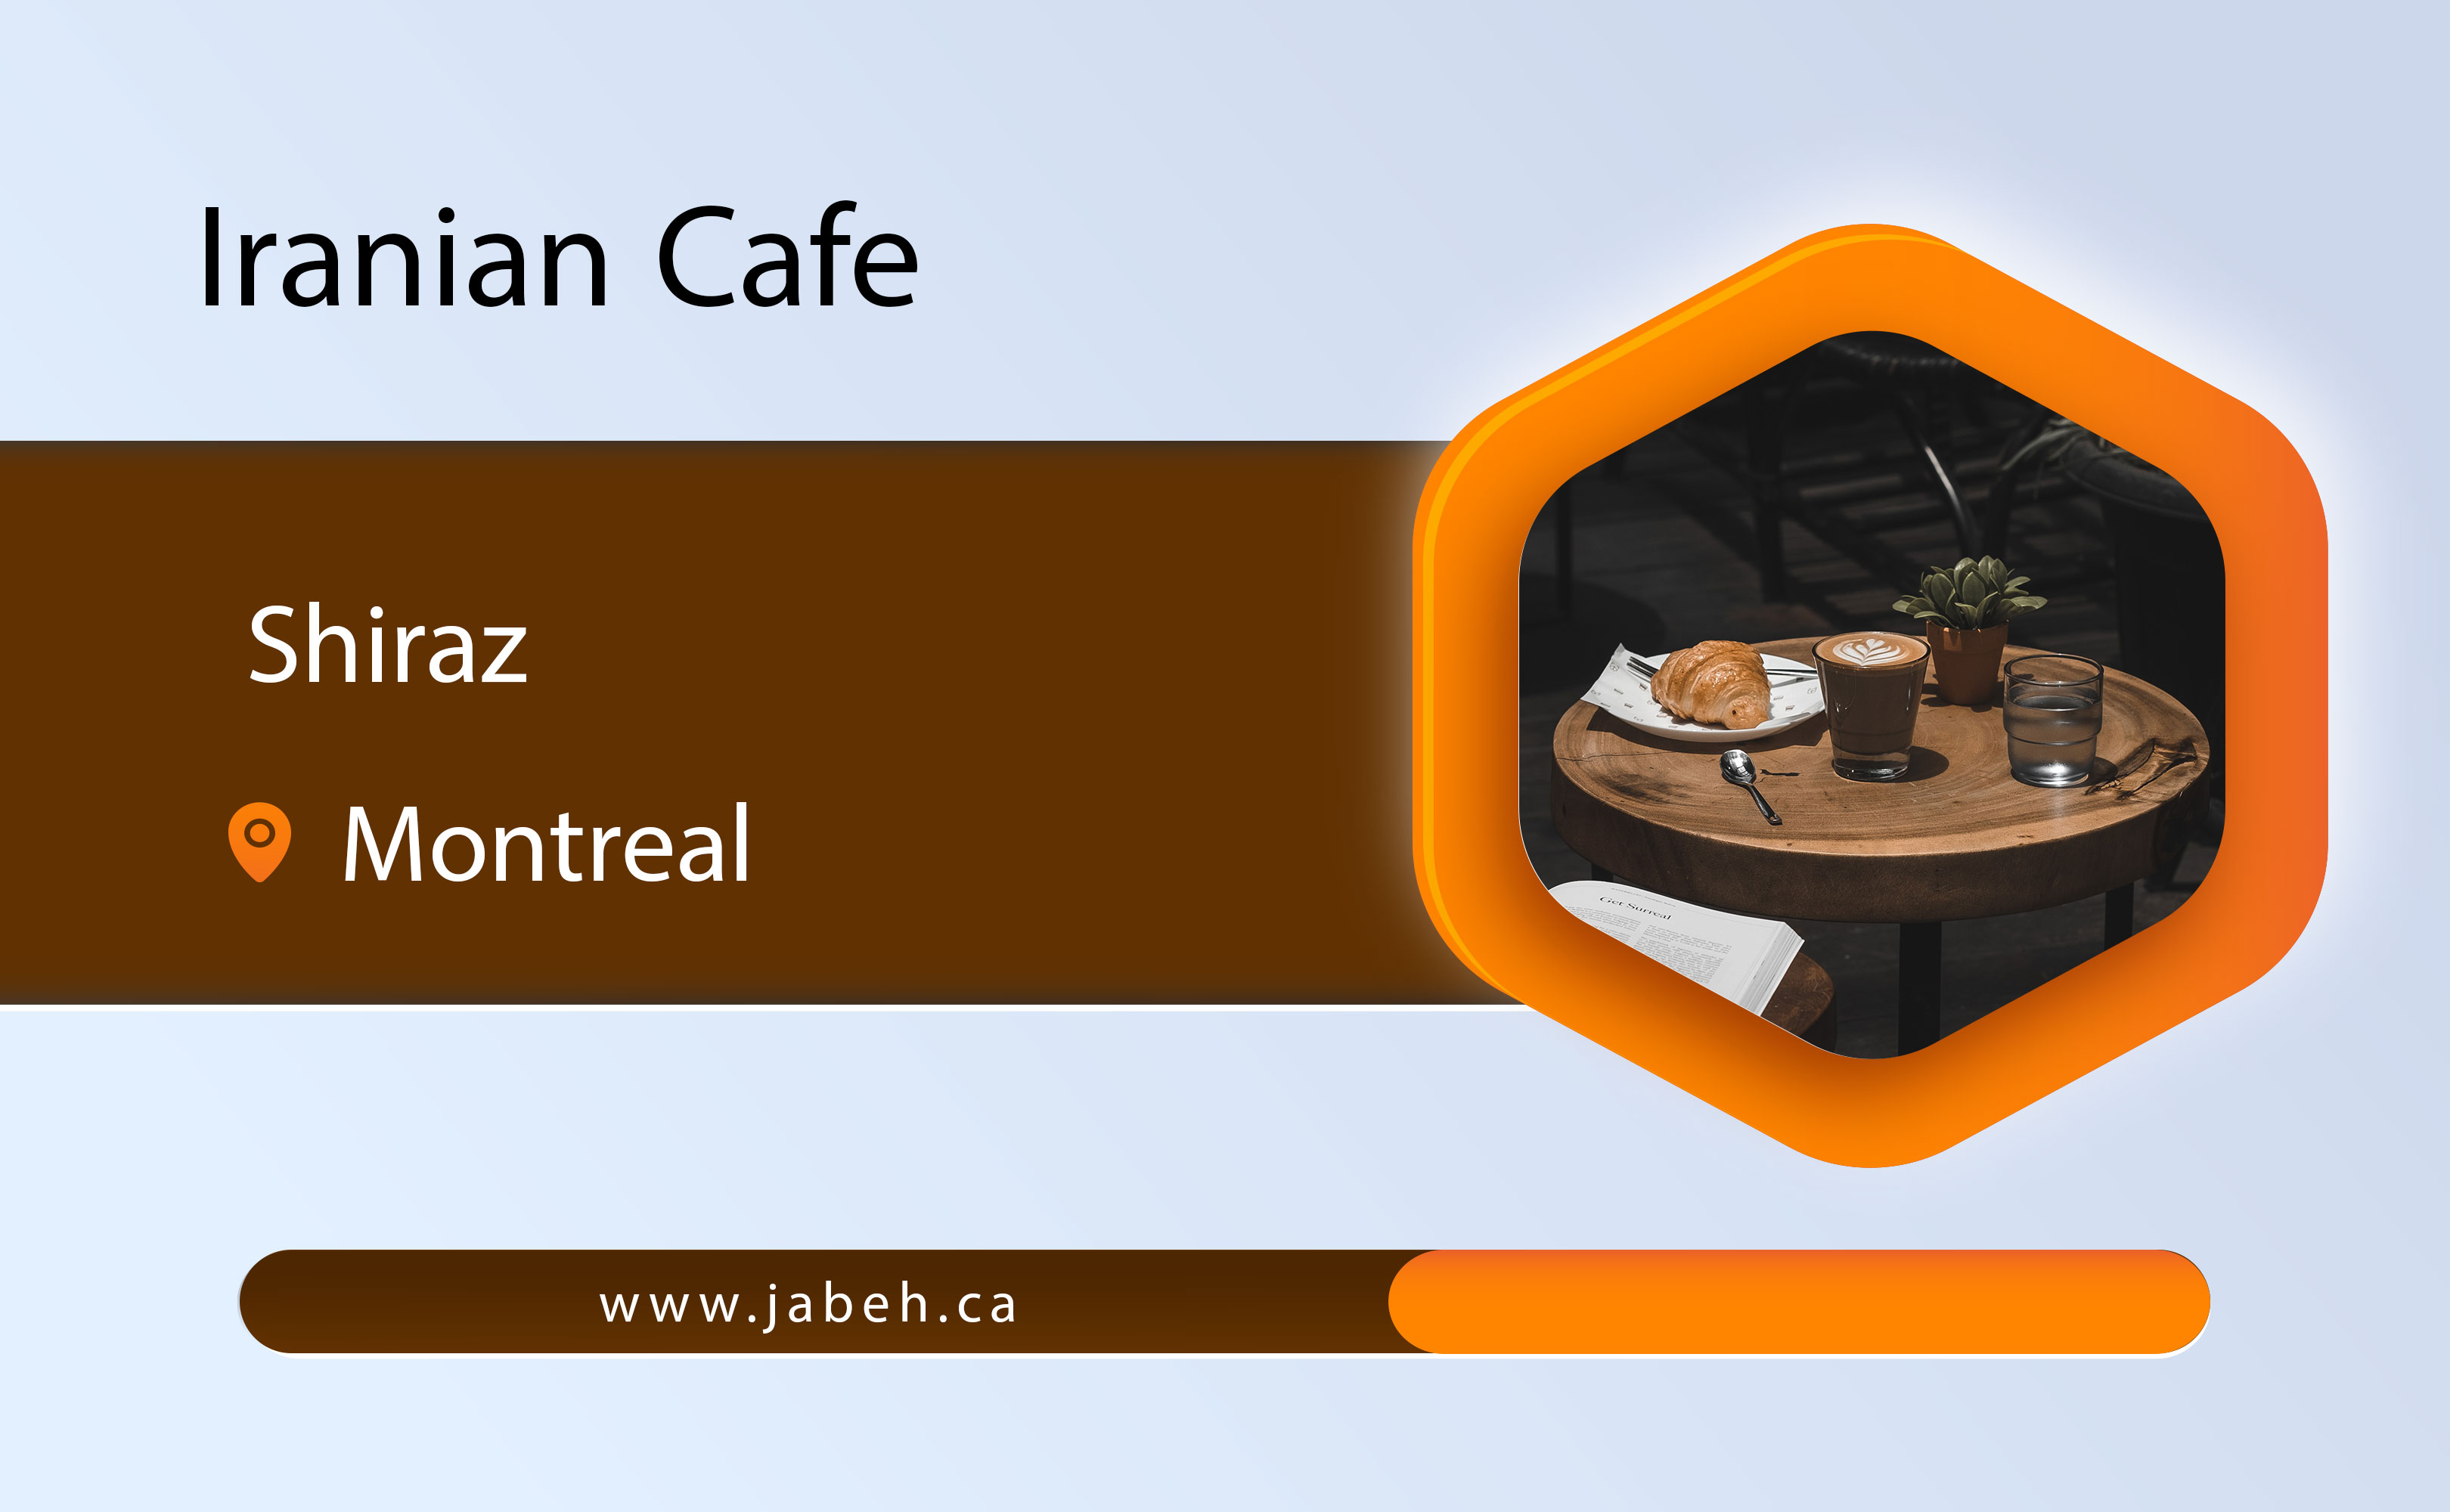 Shiraz Iranian Cafe in Montreal